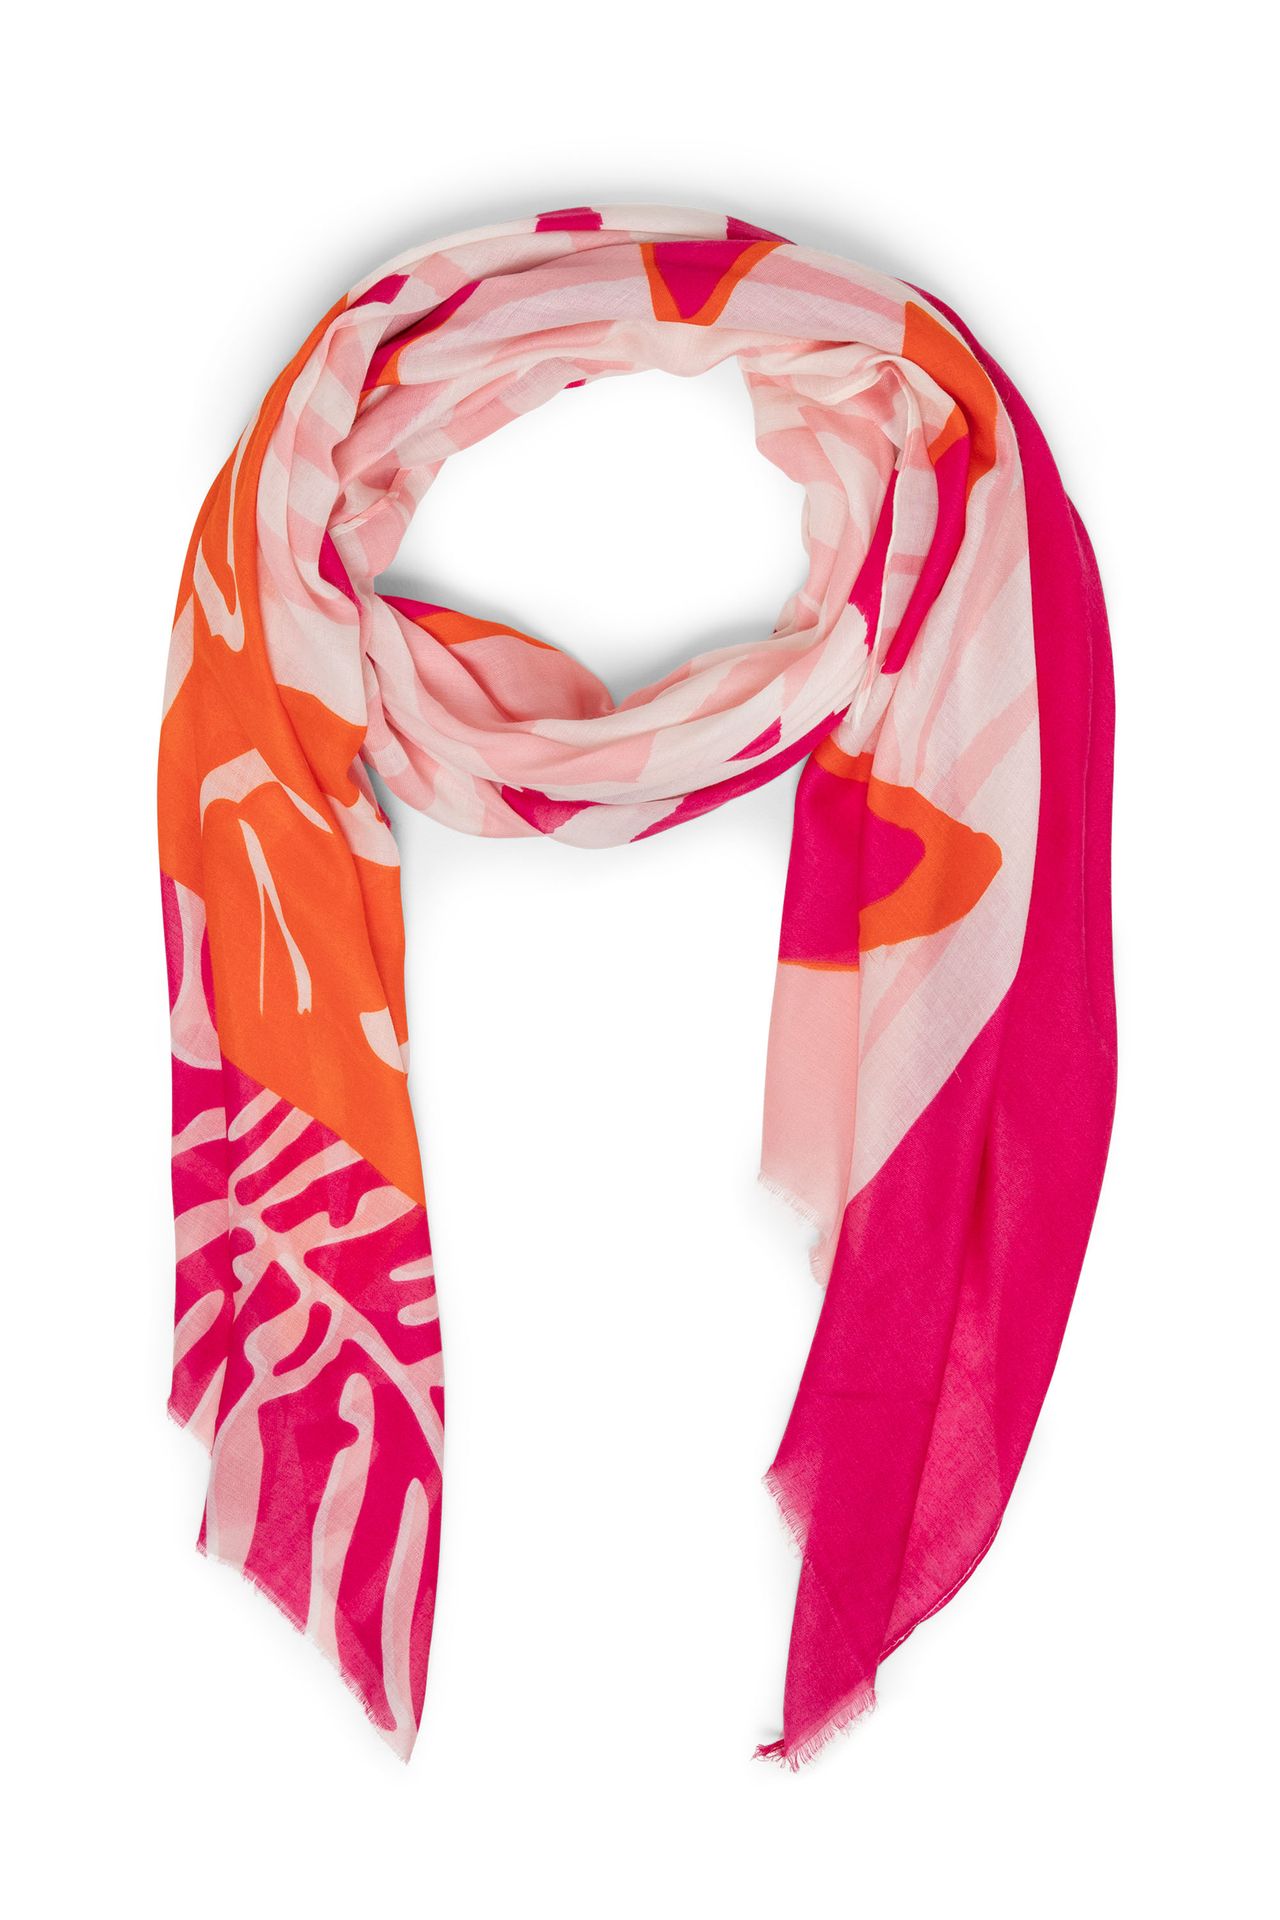 Norah Sjaal oranje en roze pink/orange 213571-937